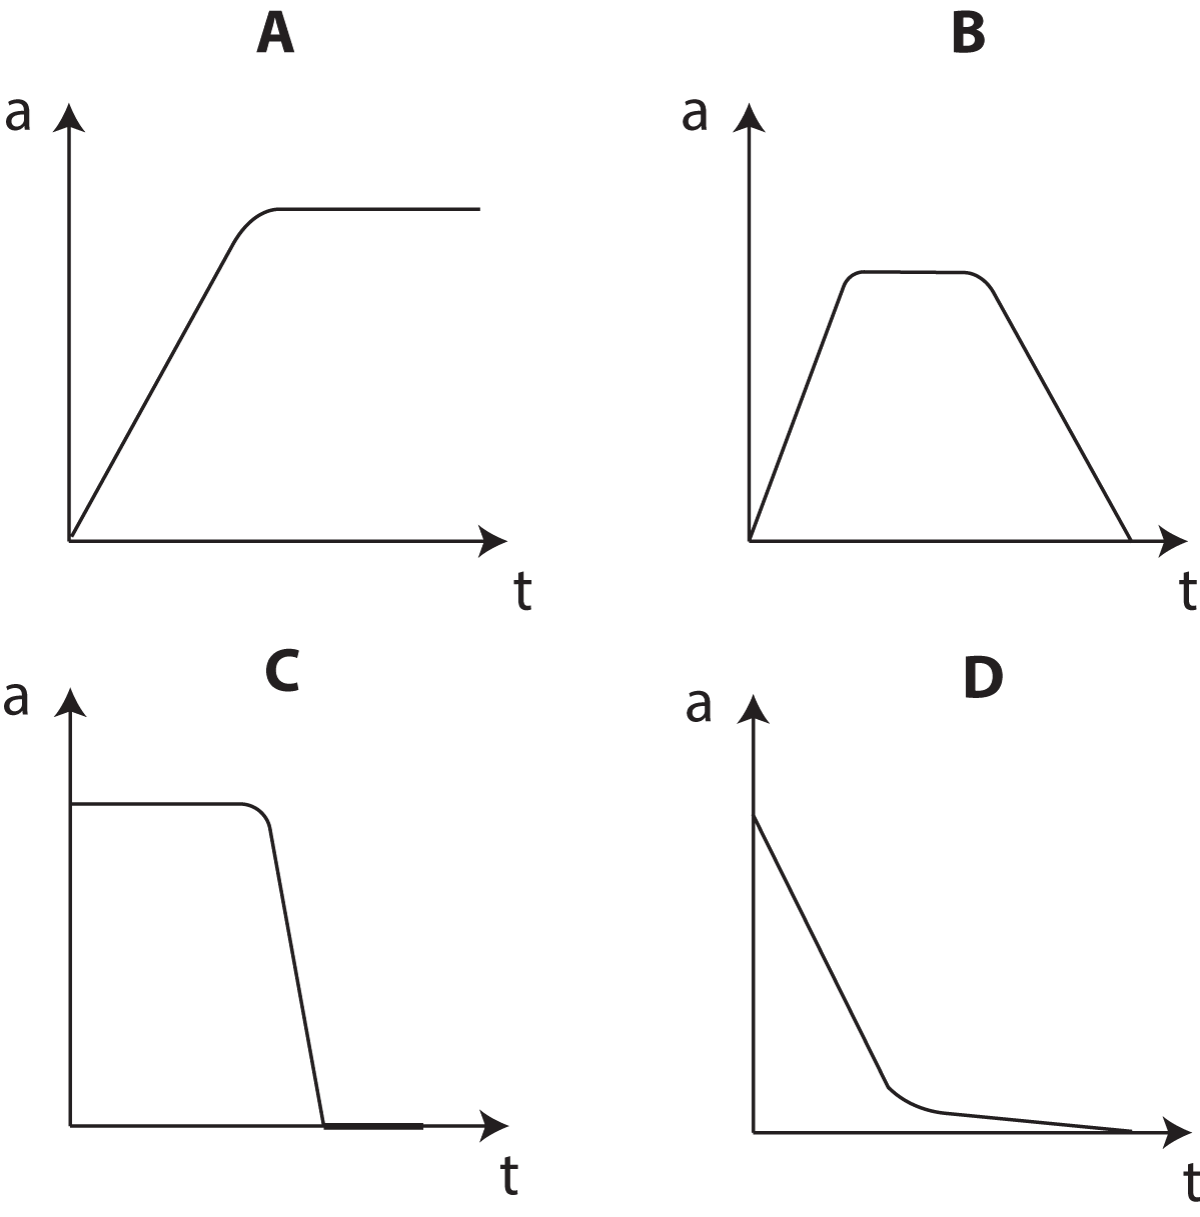 a_t graphs x 4 showing bus acceleration